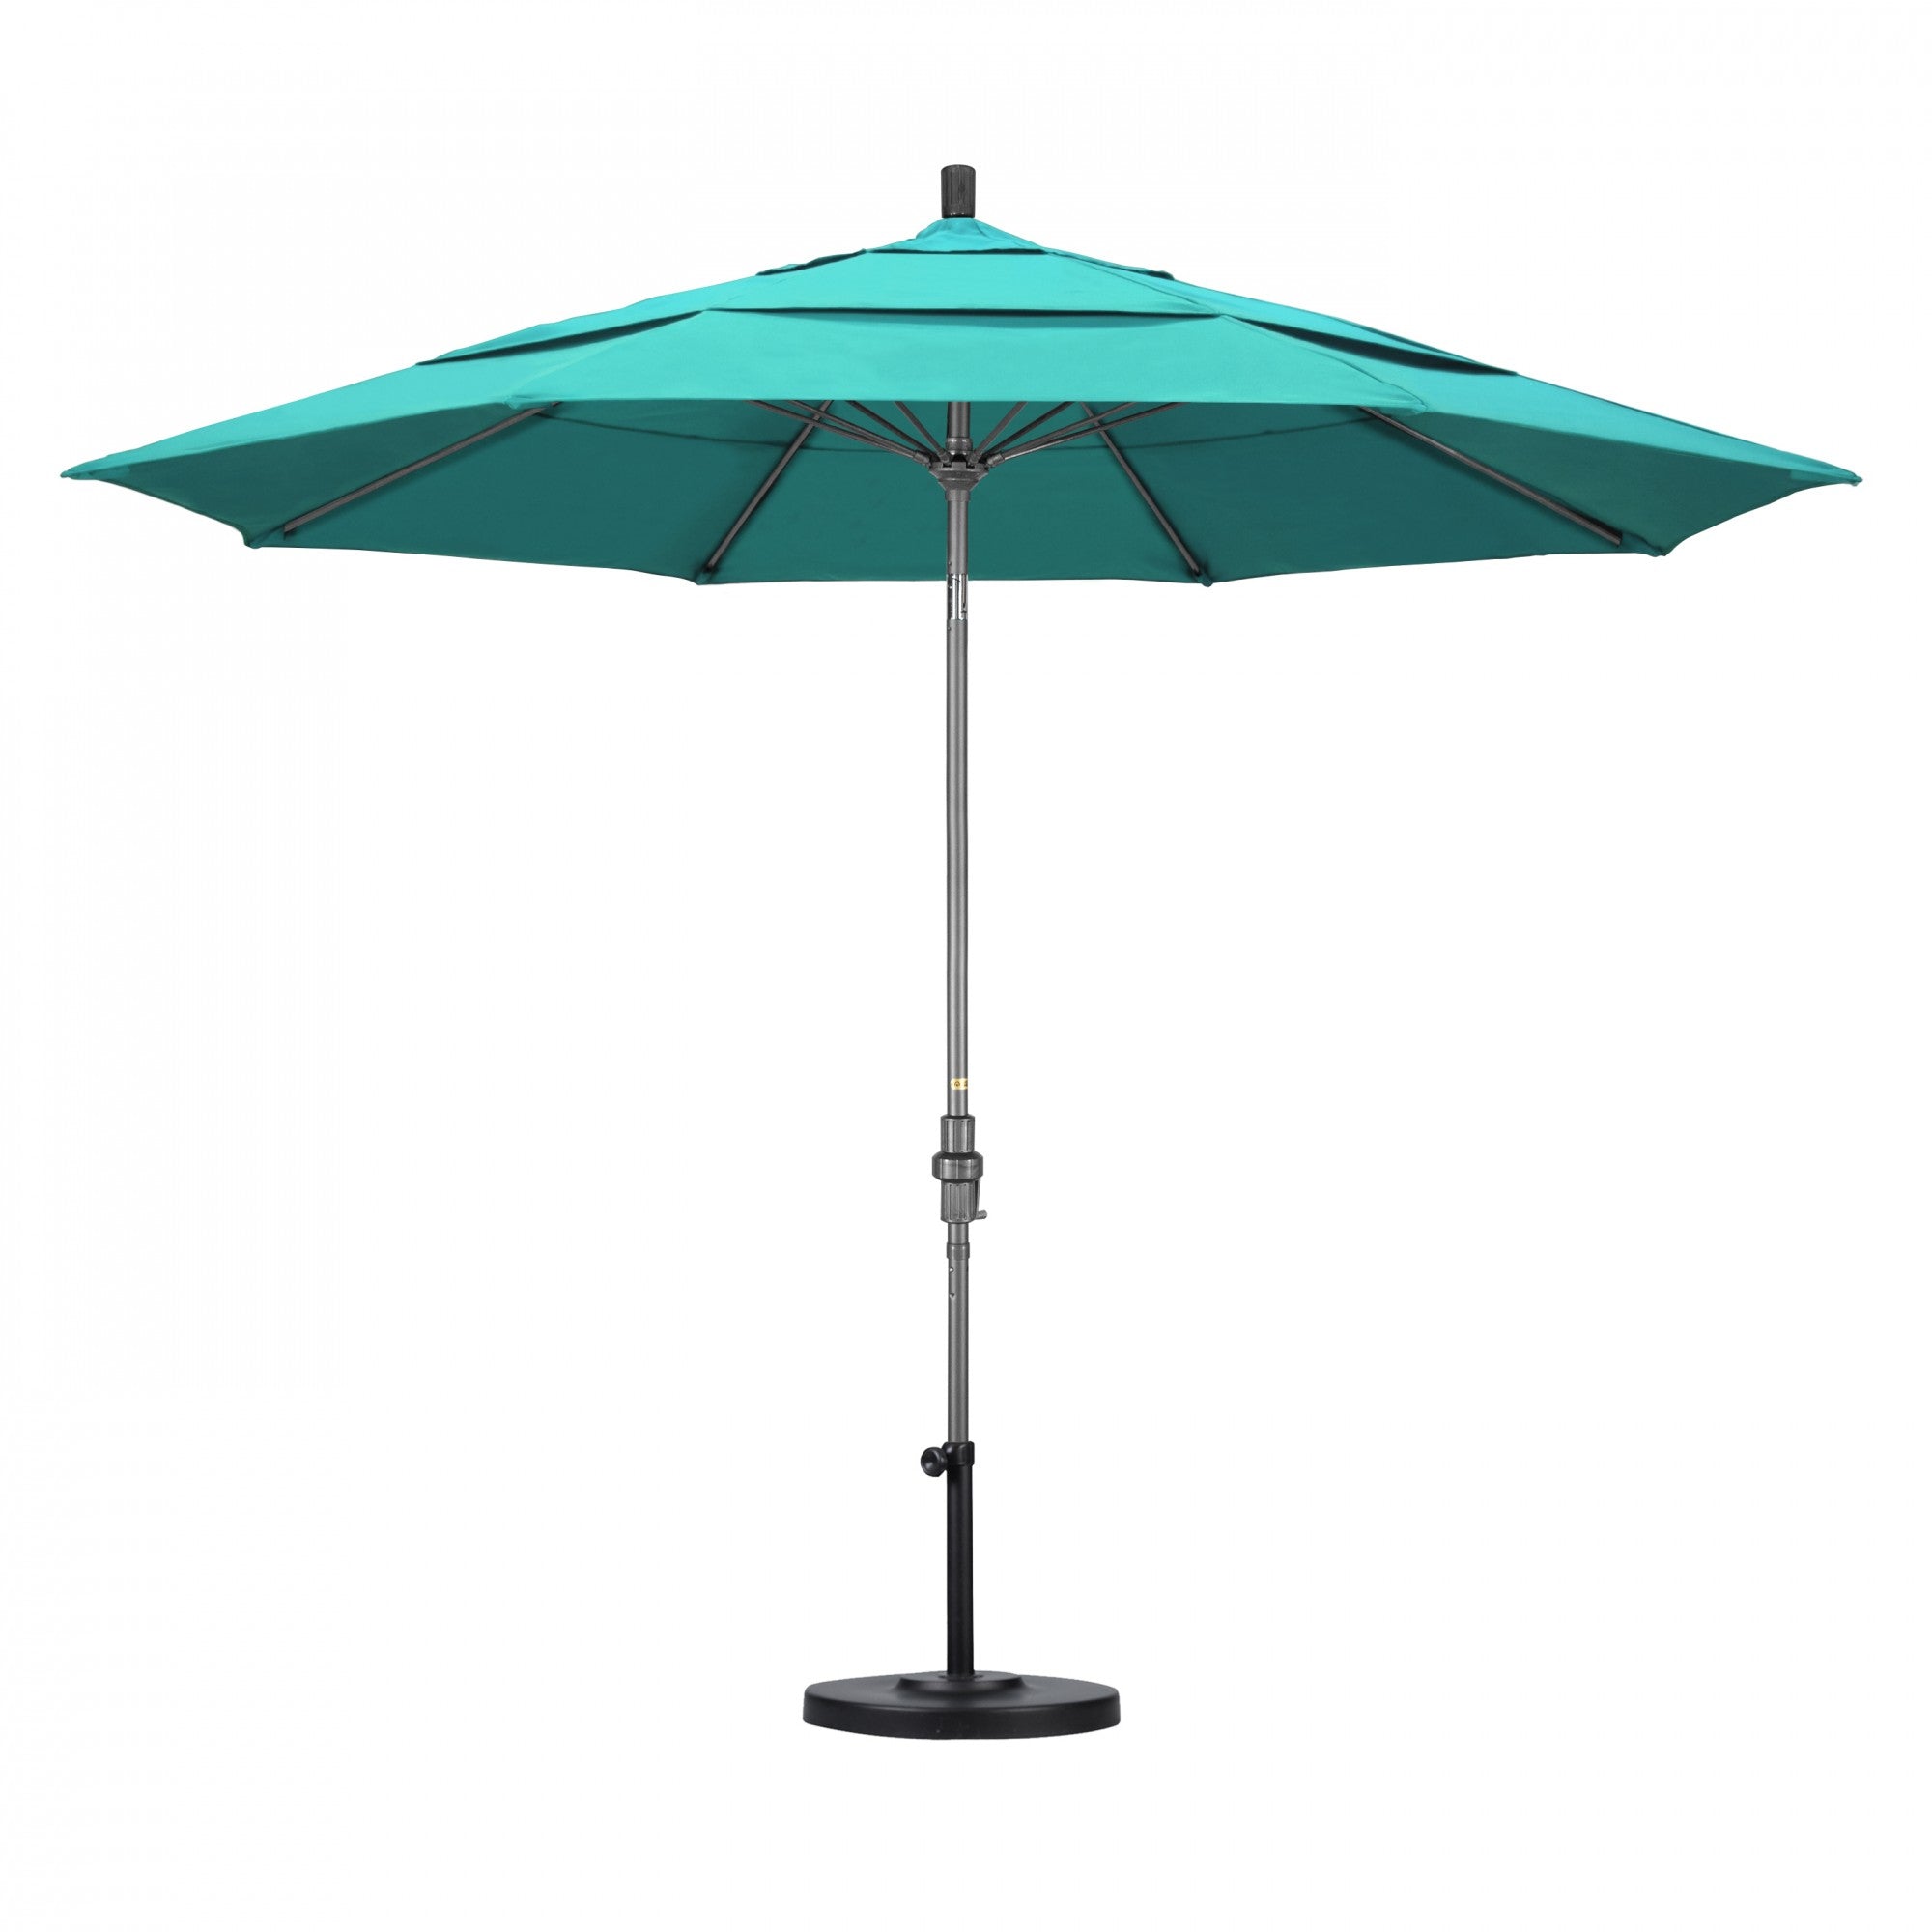 California Umbrella - 11' - Patio Umbrella Umbrella - Aluminum Pole - Aruba - Sunbrella  - GSCUF118010-5416-DWV